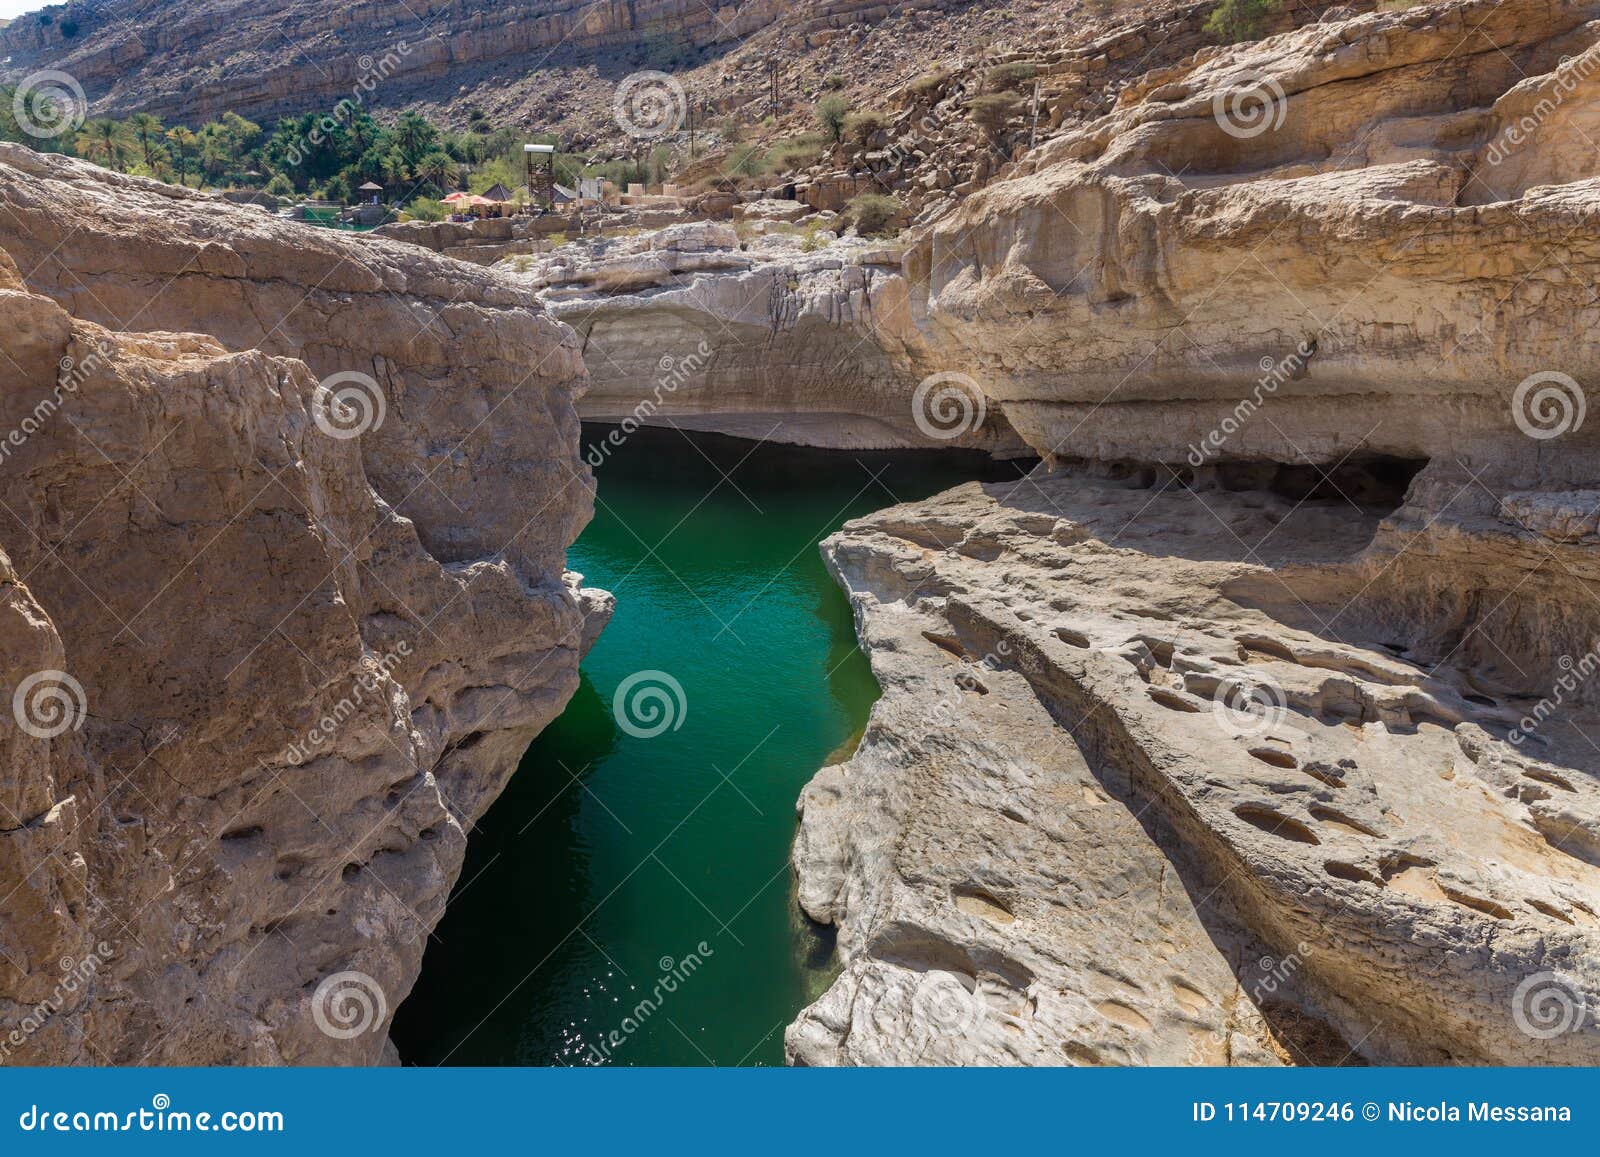 emerald pools in wadi bani khalid, oman